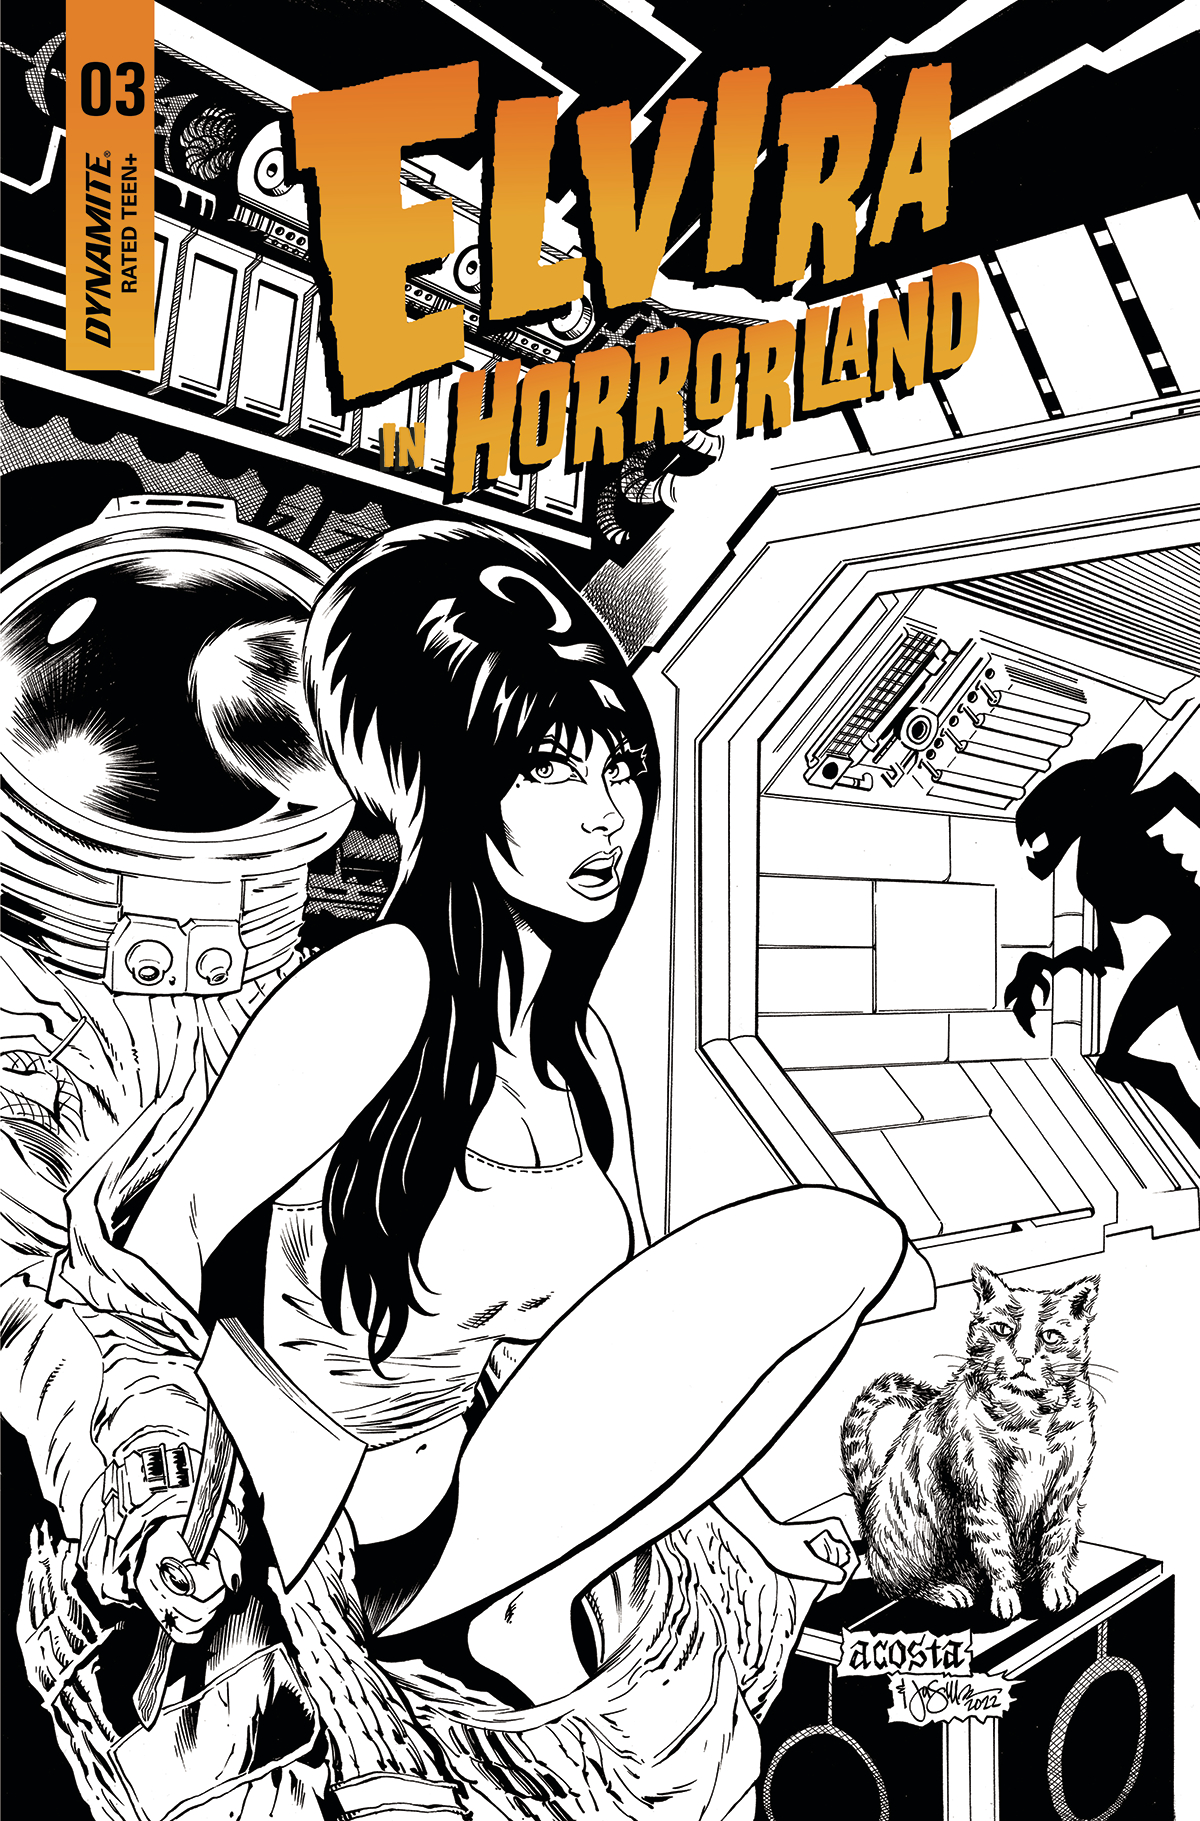 Elvira In Horrorland #3 Cover E 1 for 10 Incentive Acosta Black & White